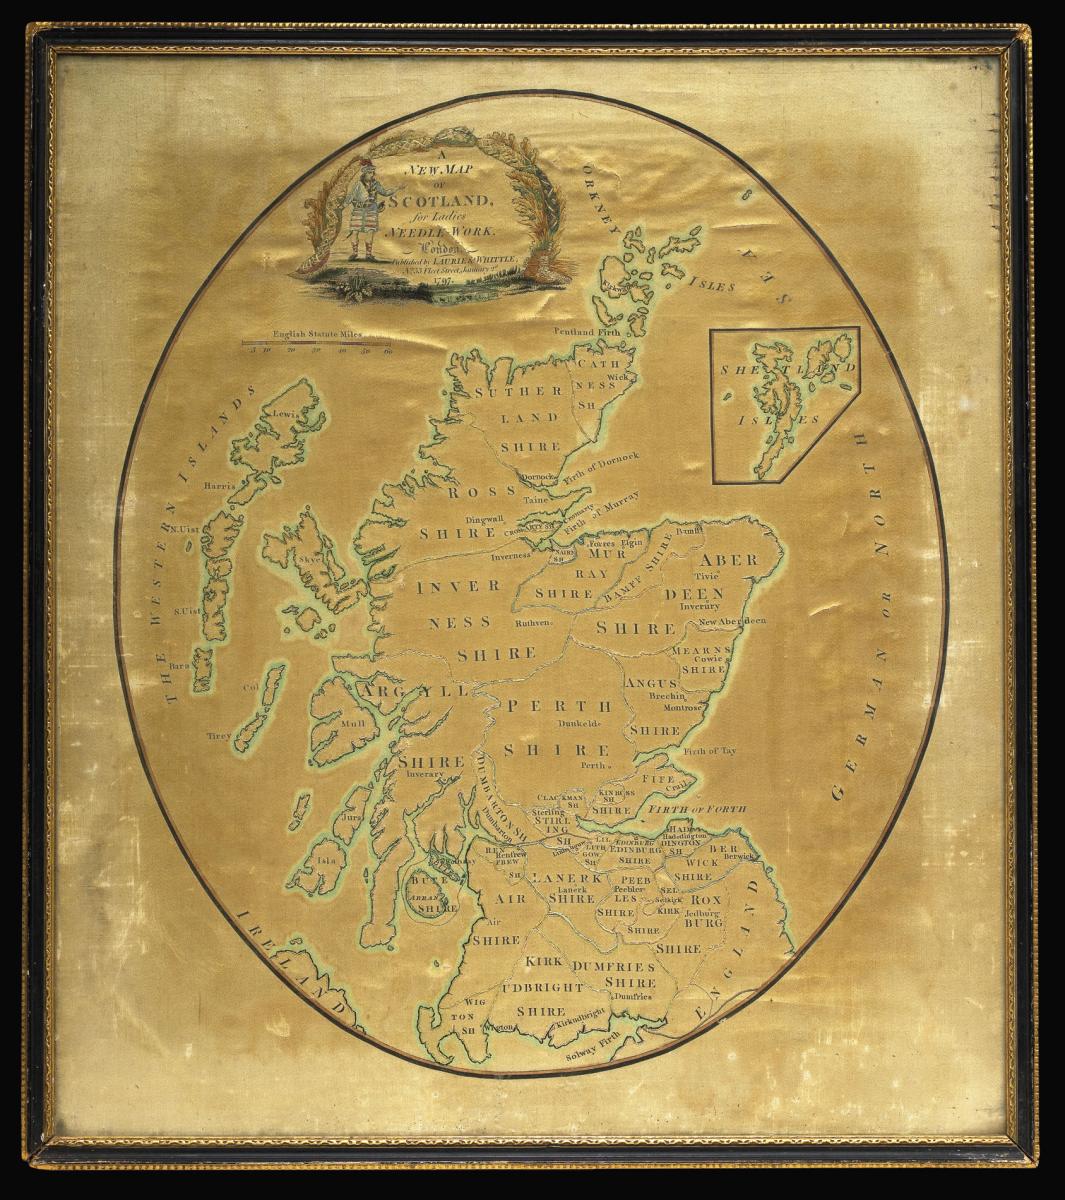 Needlework map of Scotland